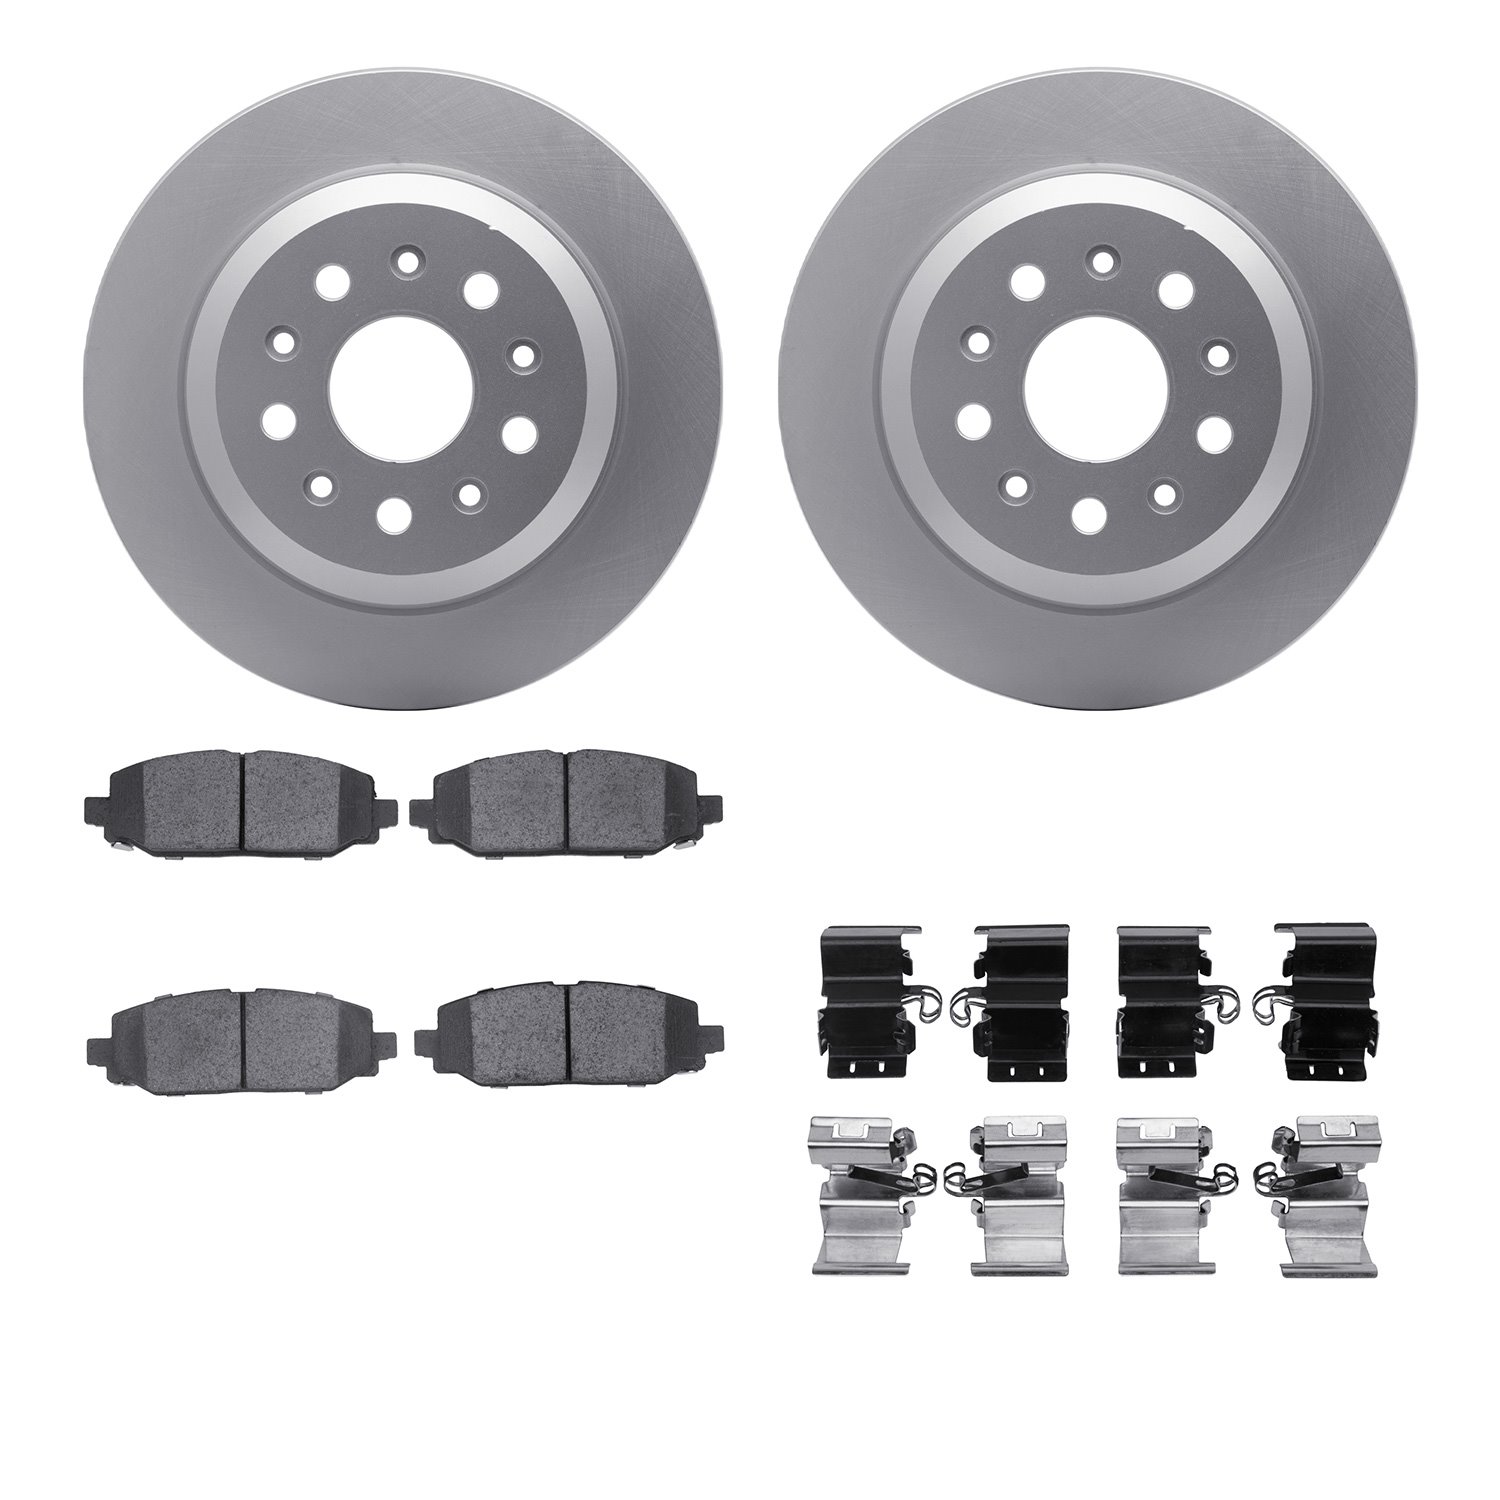 4412-42034 Geospec Brake Rotors with Ultimate-Duty Brake Pads & Hardware, Fits Select Mopar, Position: Rear